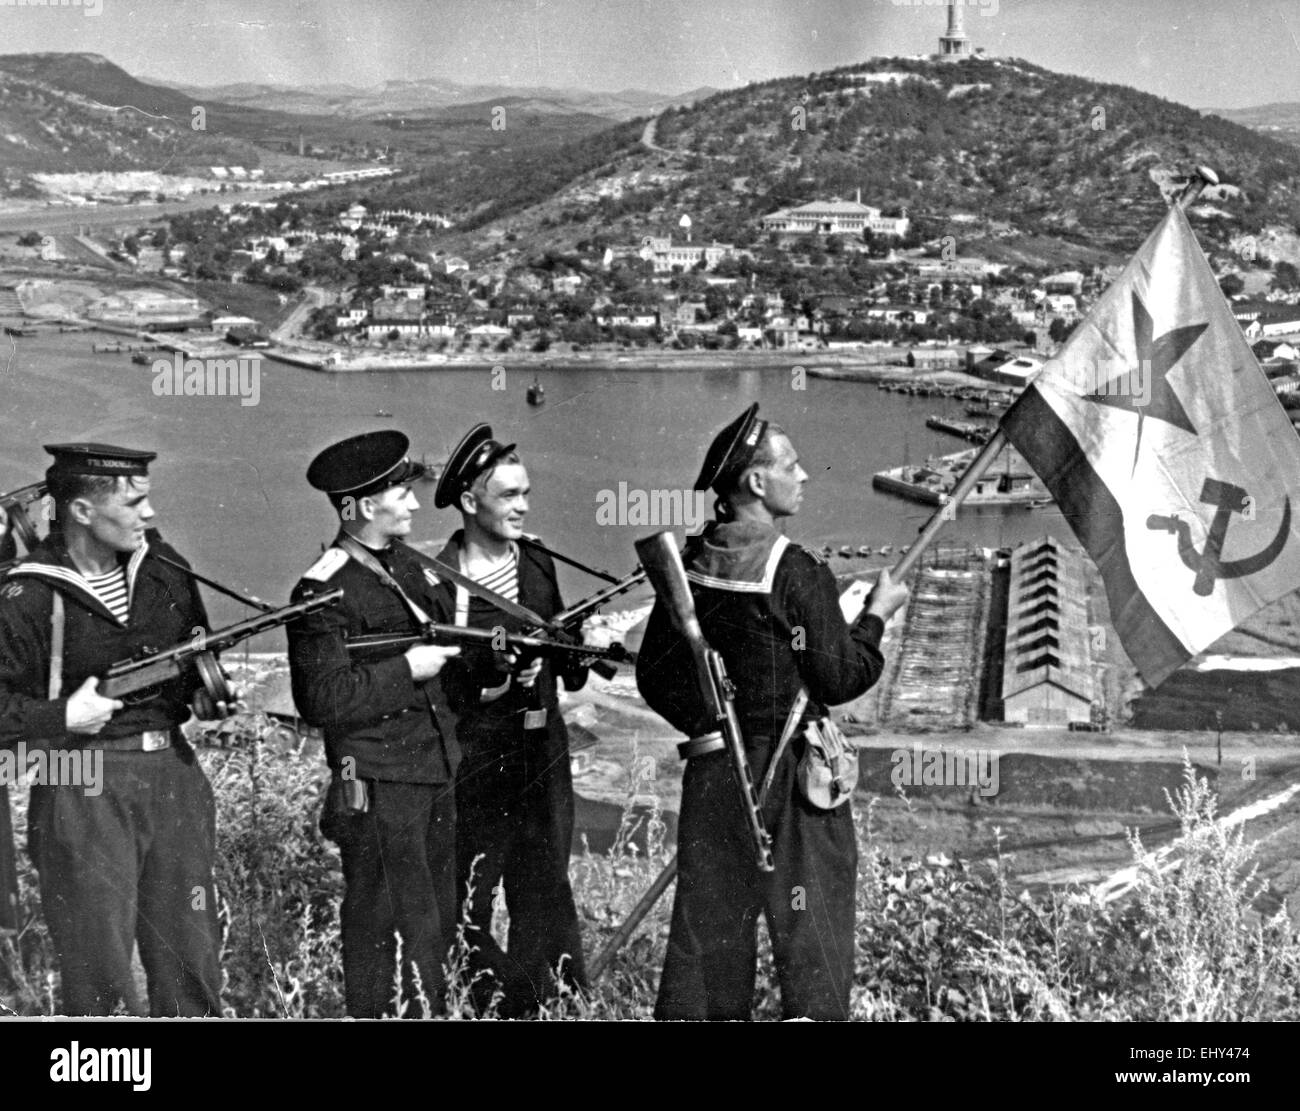 LANDING PARTY OF THE SOVIET PACIFIC FLEET raising a flag over Port Arthur in 1945 Stock Photo